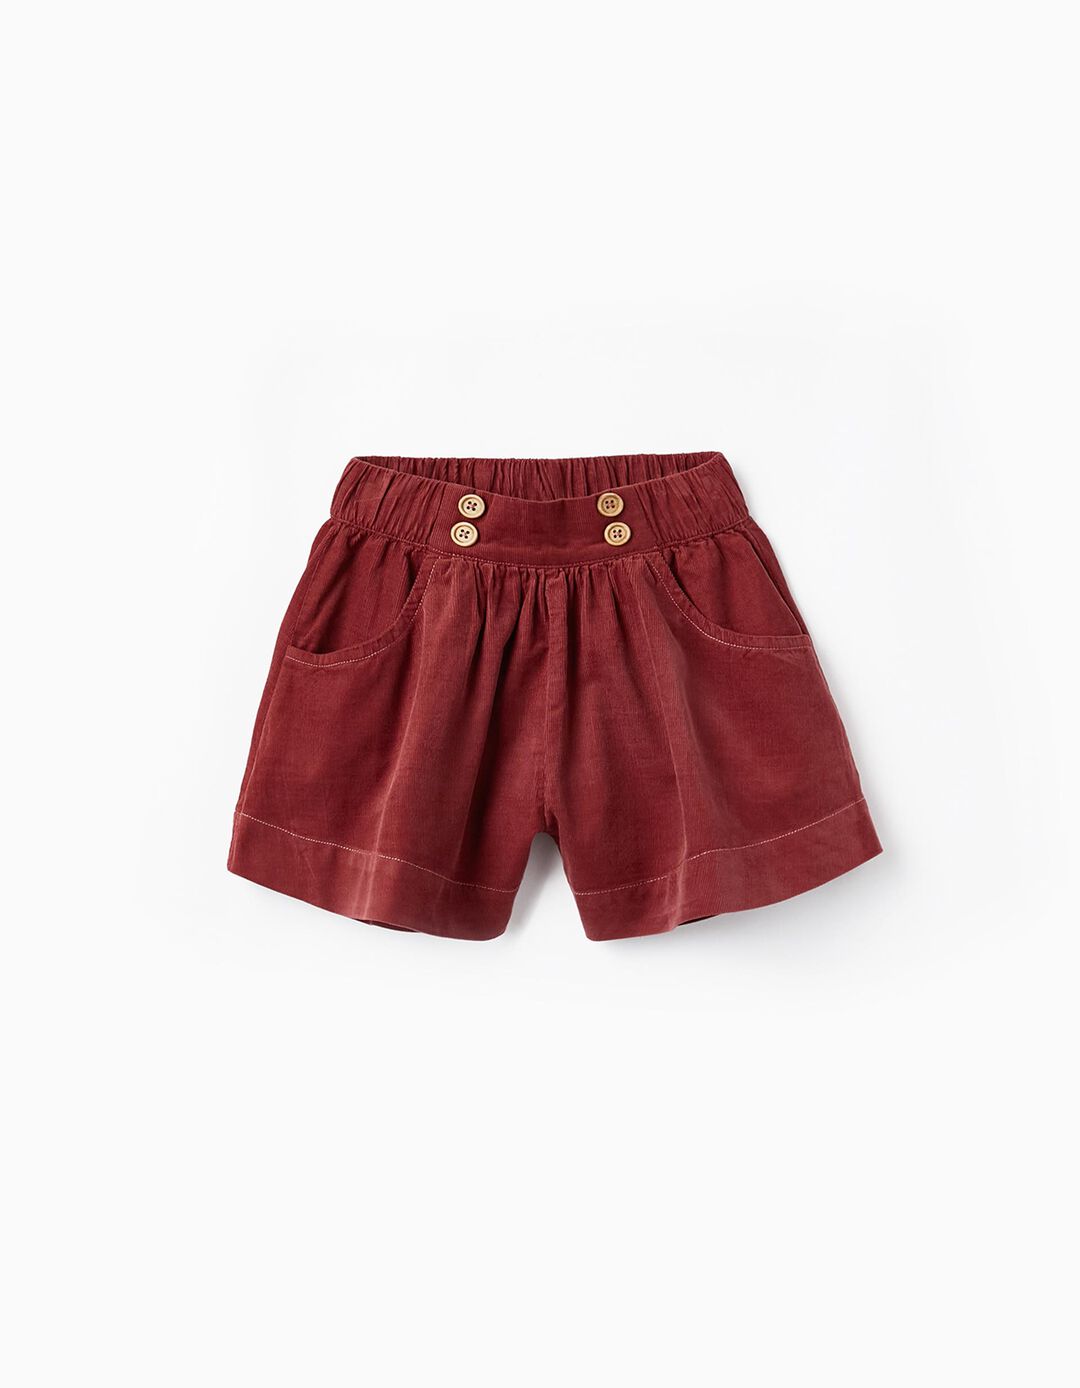 Shorts in Cotton Corduroy for Girls, Dark Red